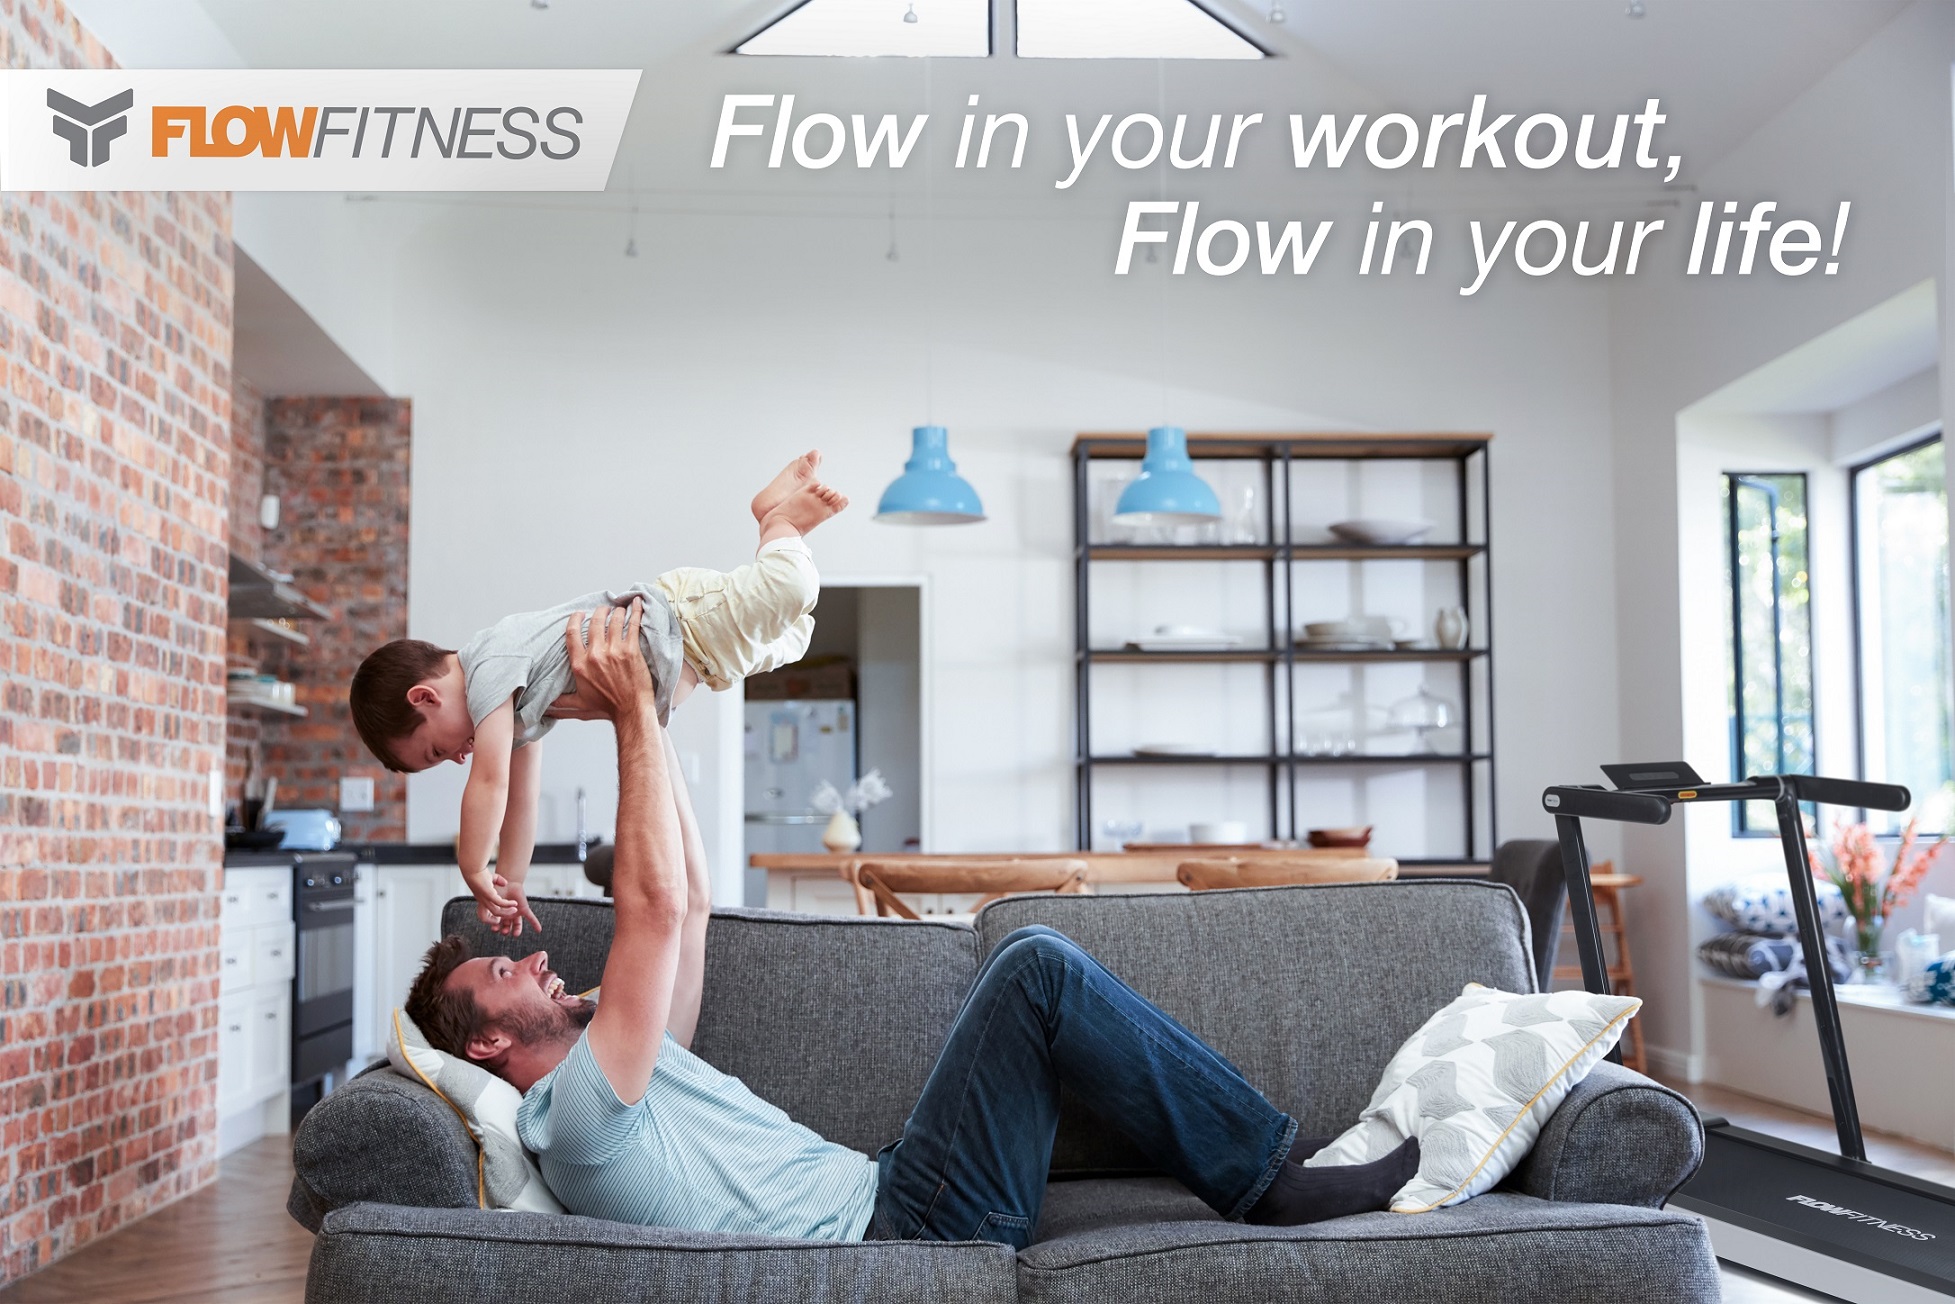 Flow Fitness